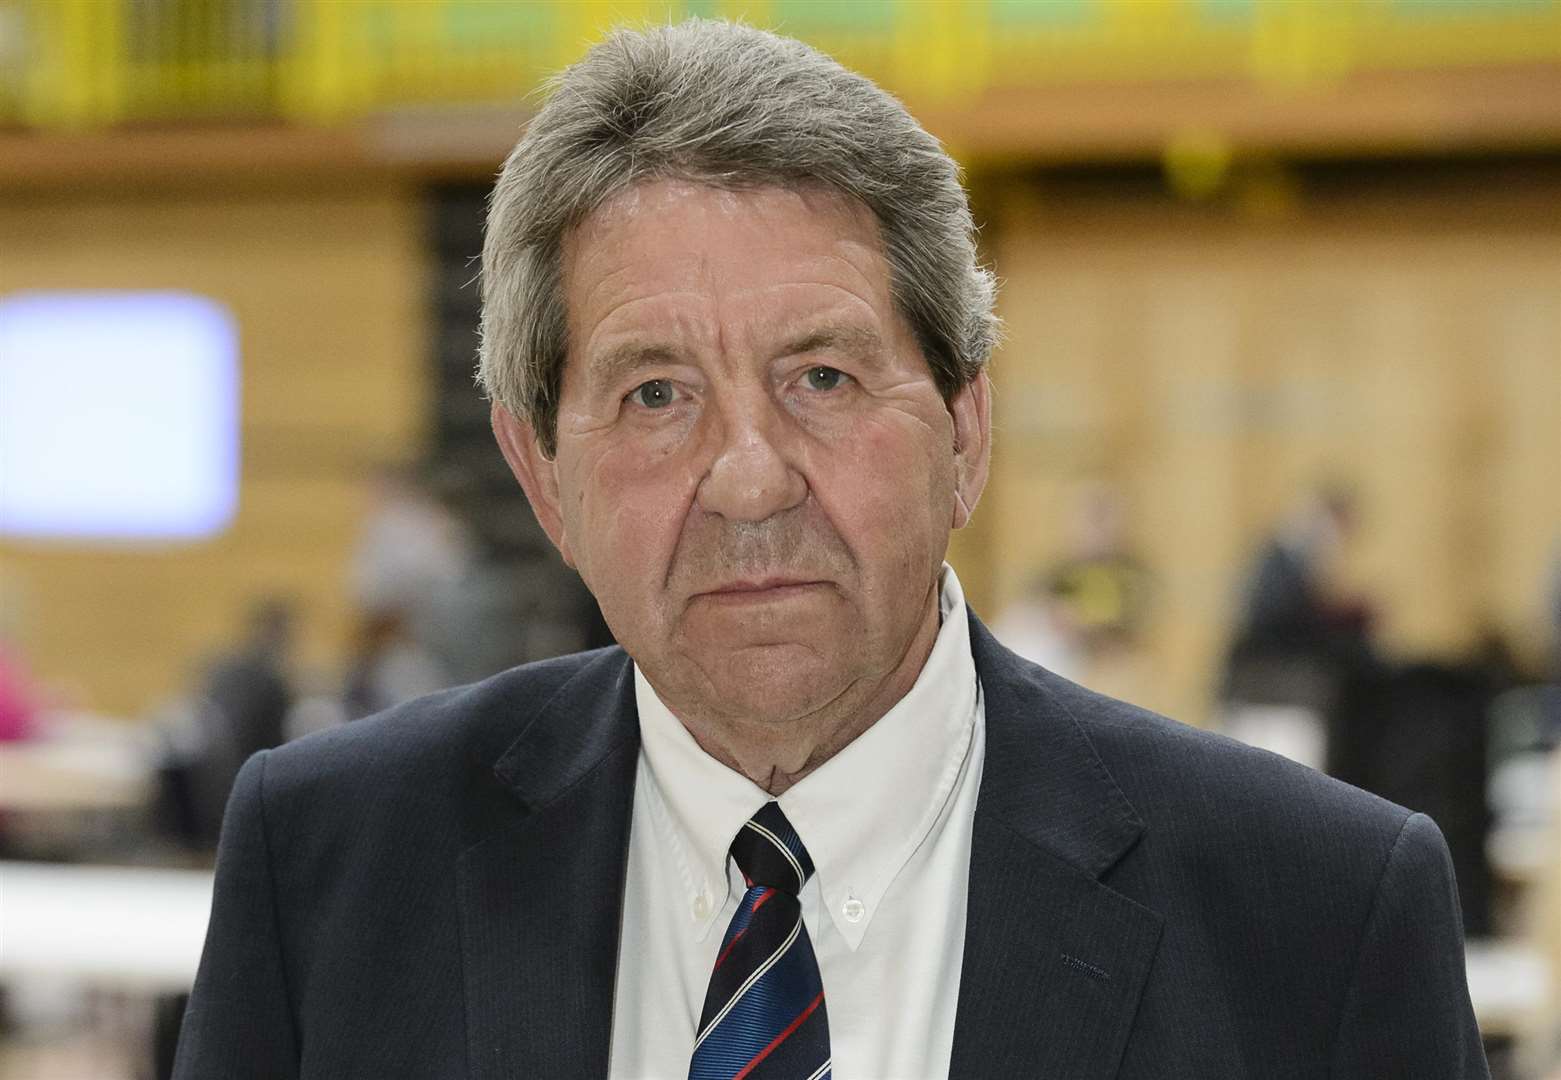 MP Gordon Henderson